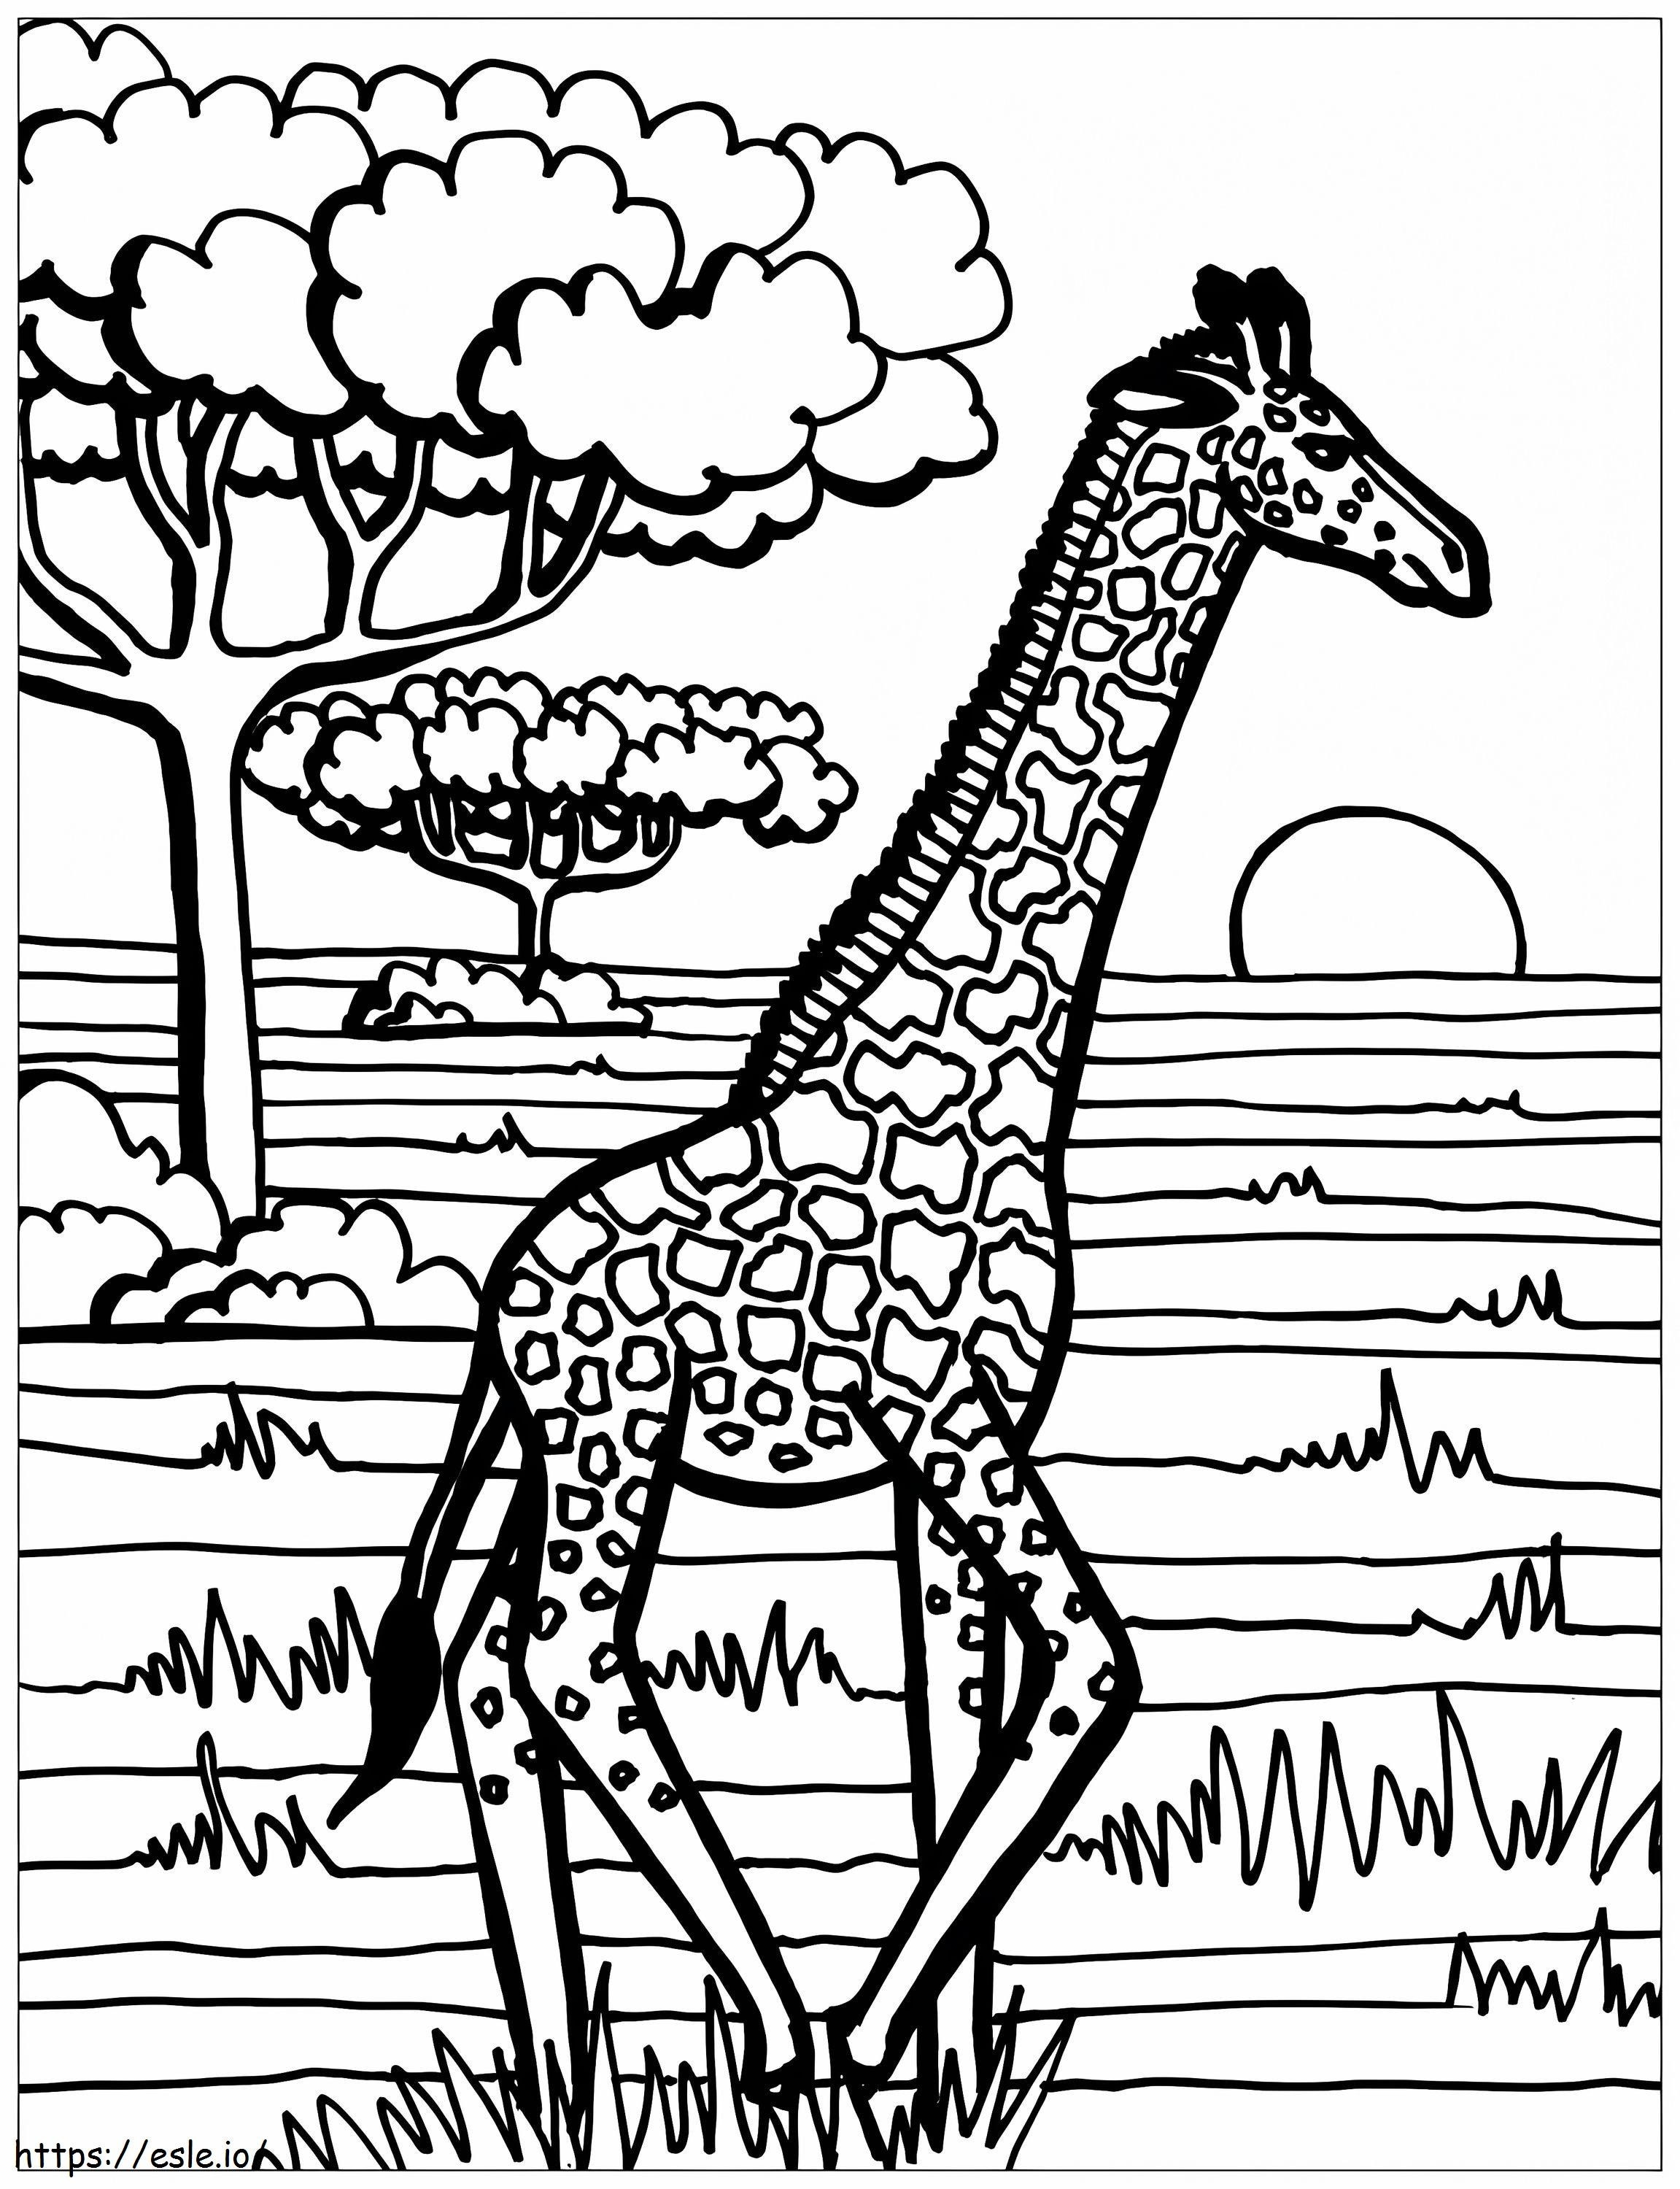 Giraffe Running coloring page